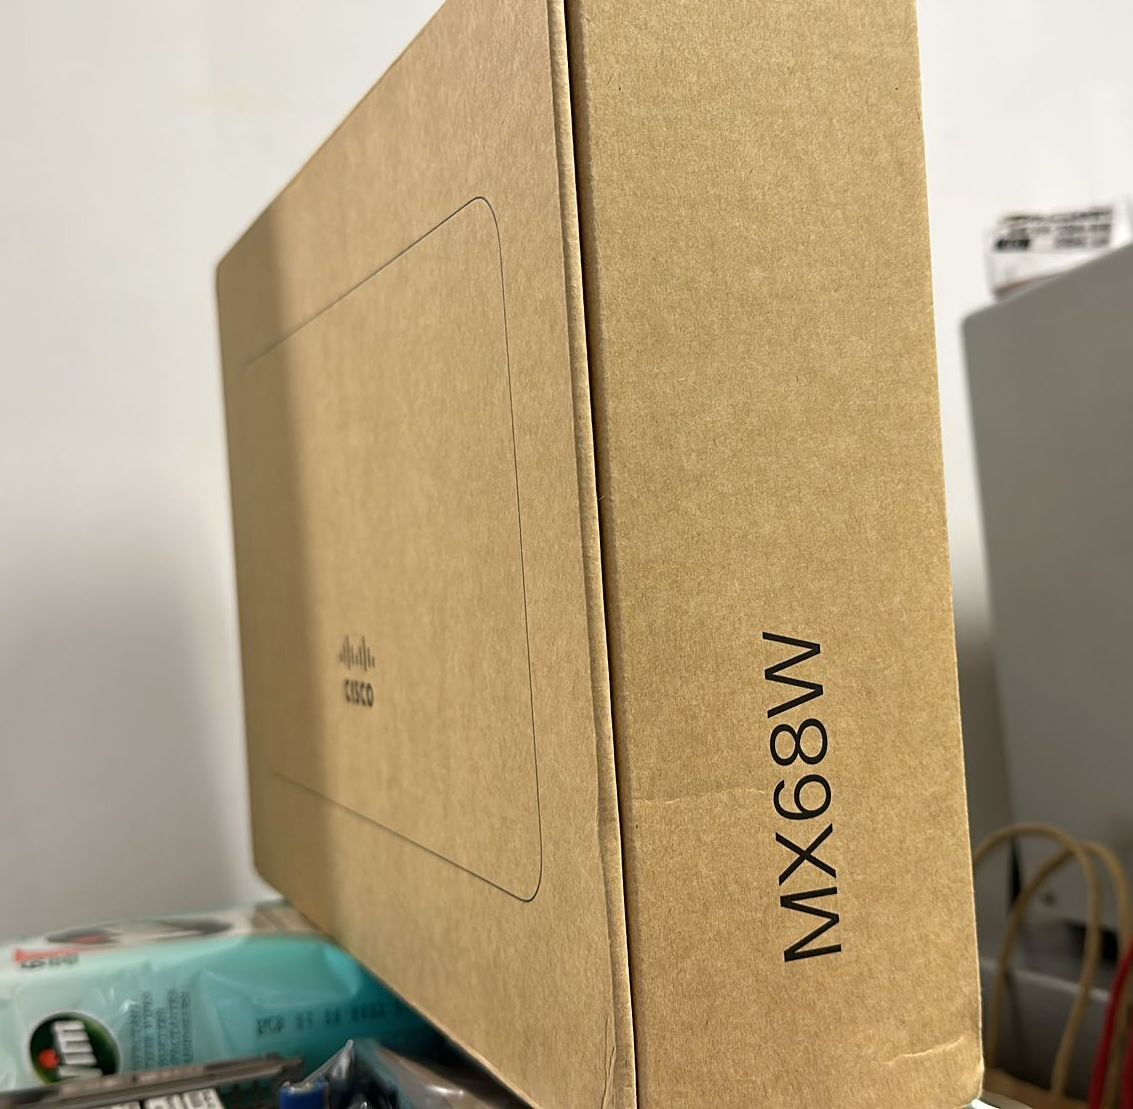 (NEW PARALLEL) CISCO Meraki MX68W Security Appliance